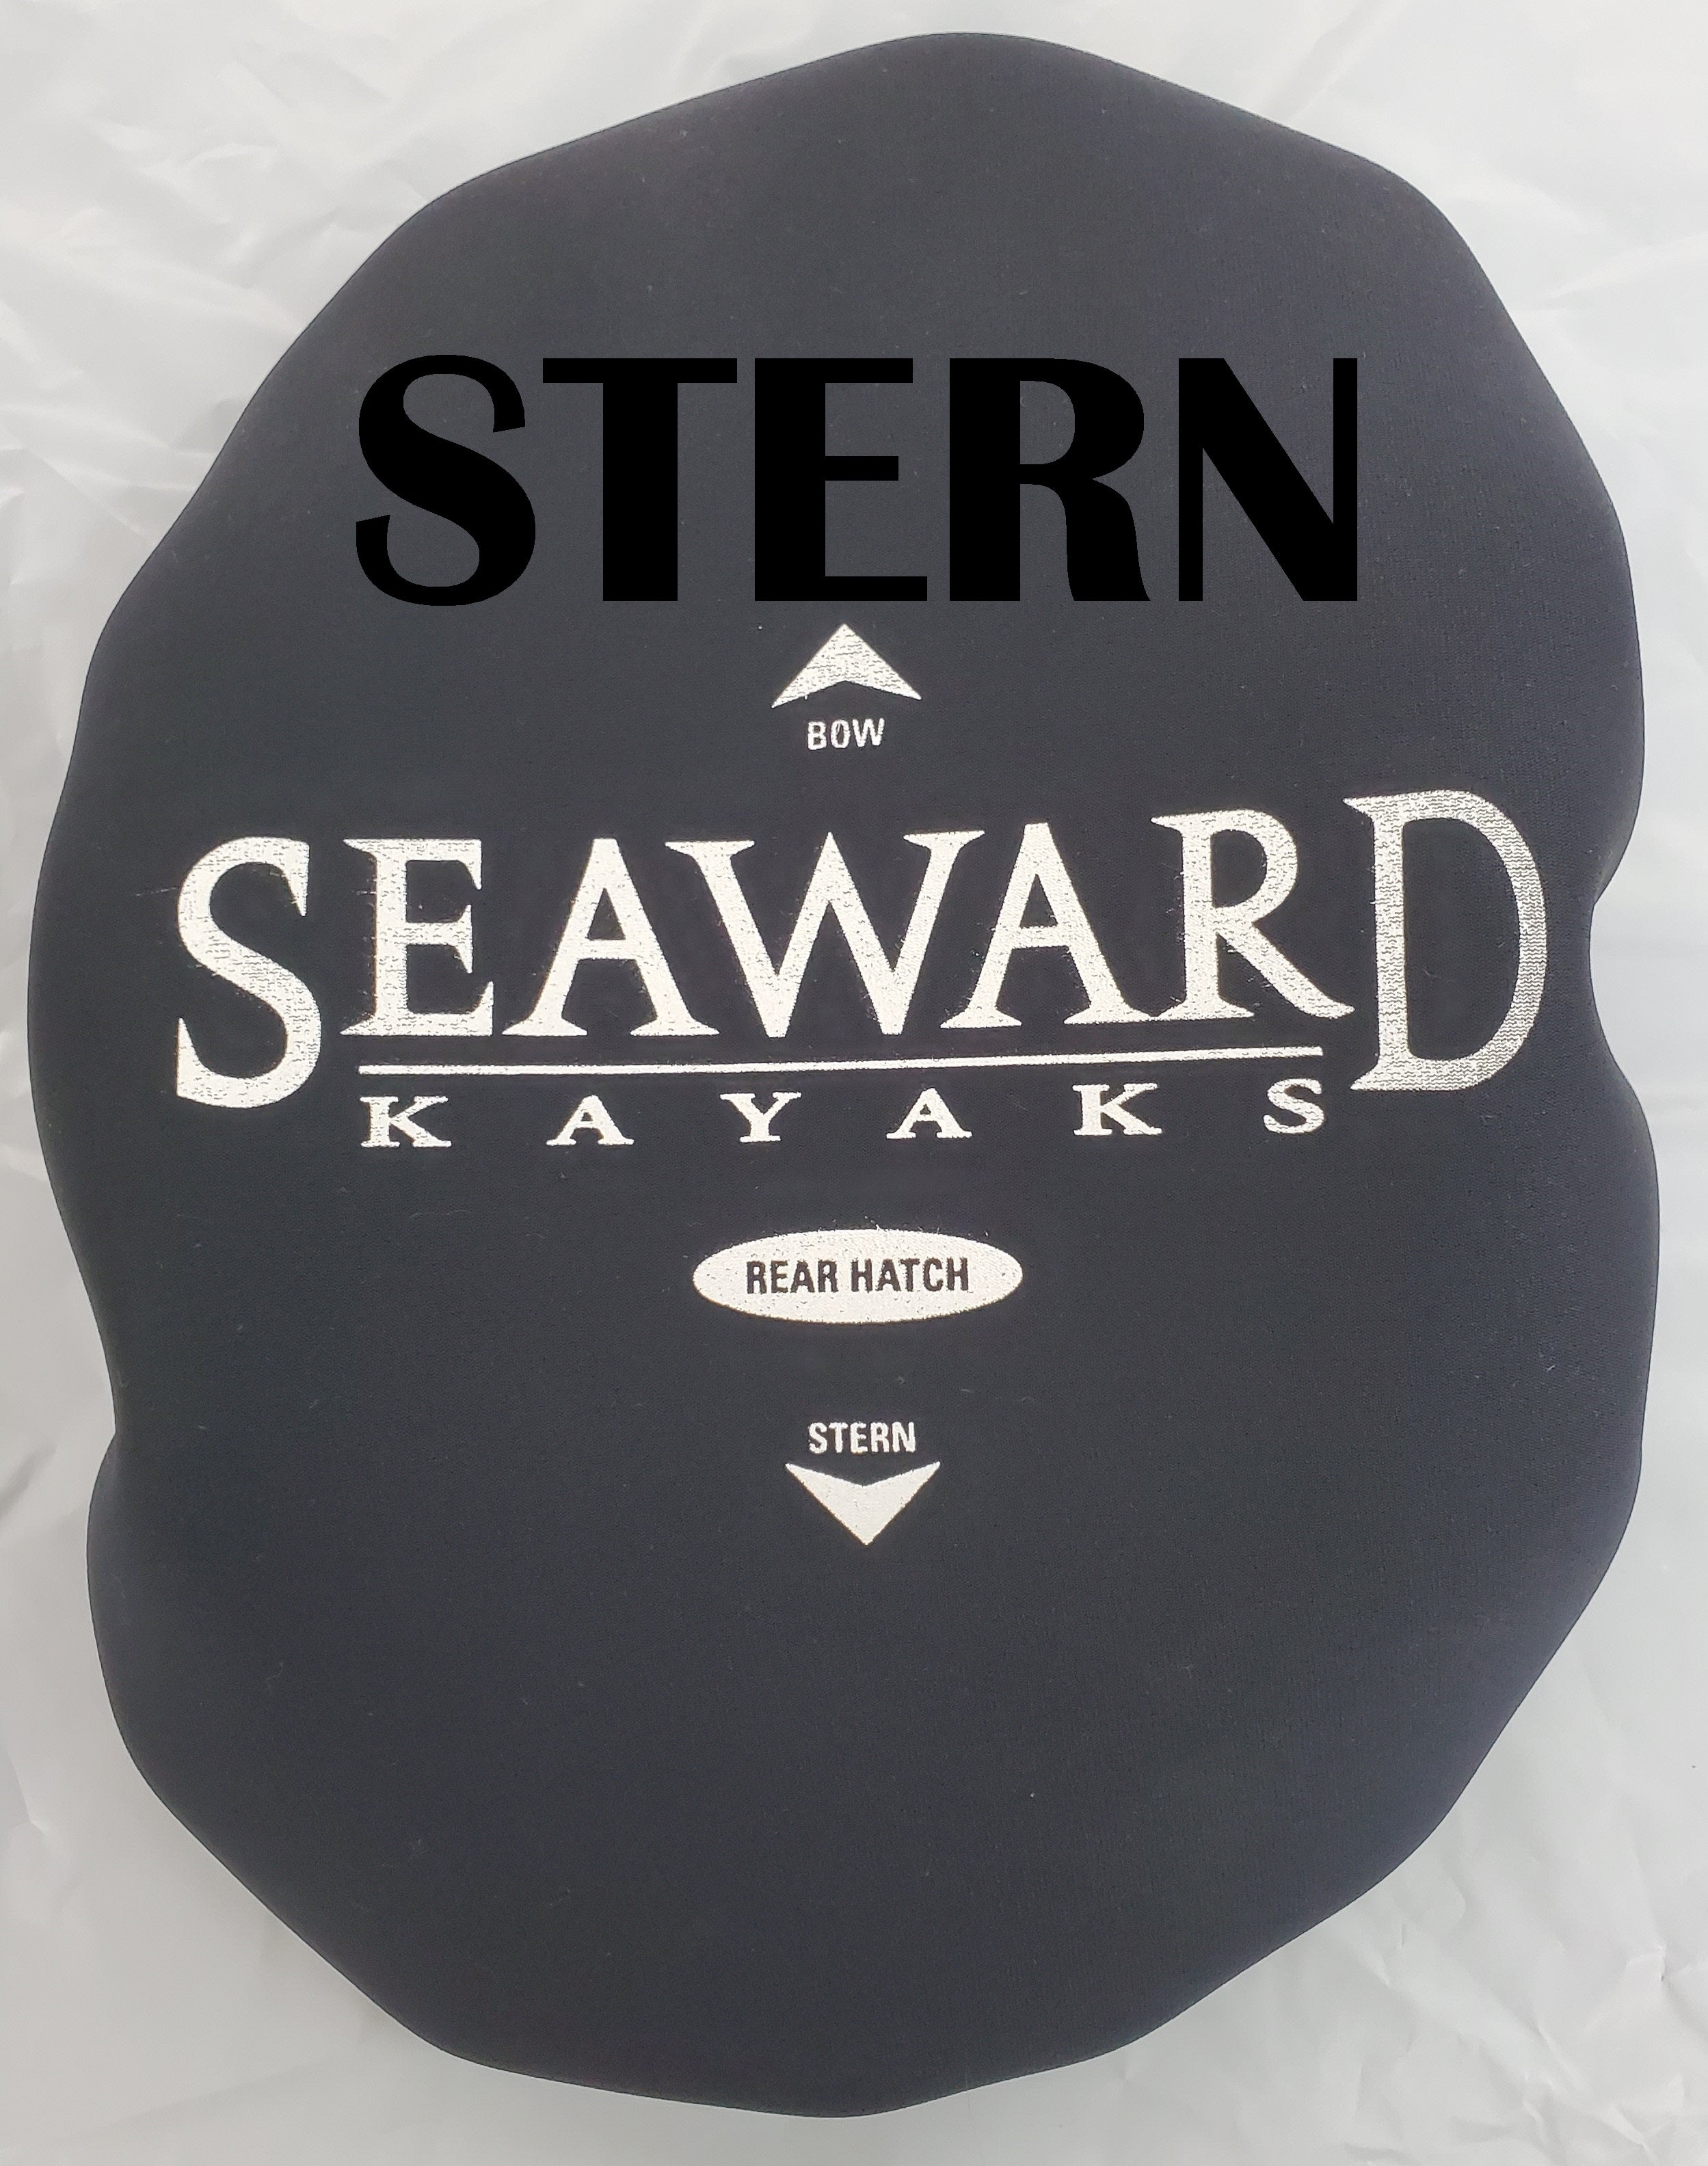 Buy Kayak Covers - Design 2 & Get 20% OFF